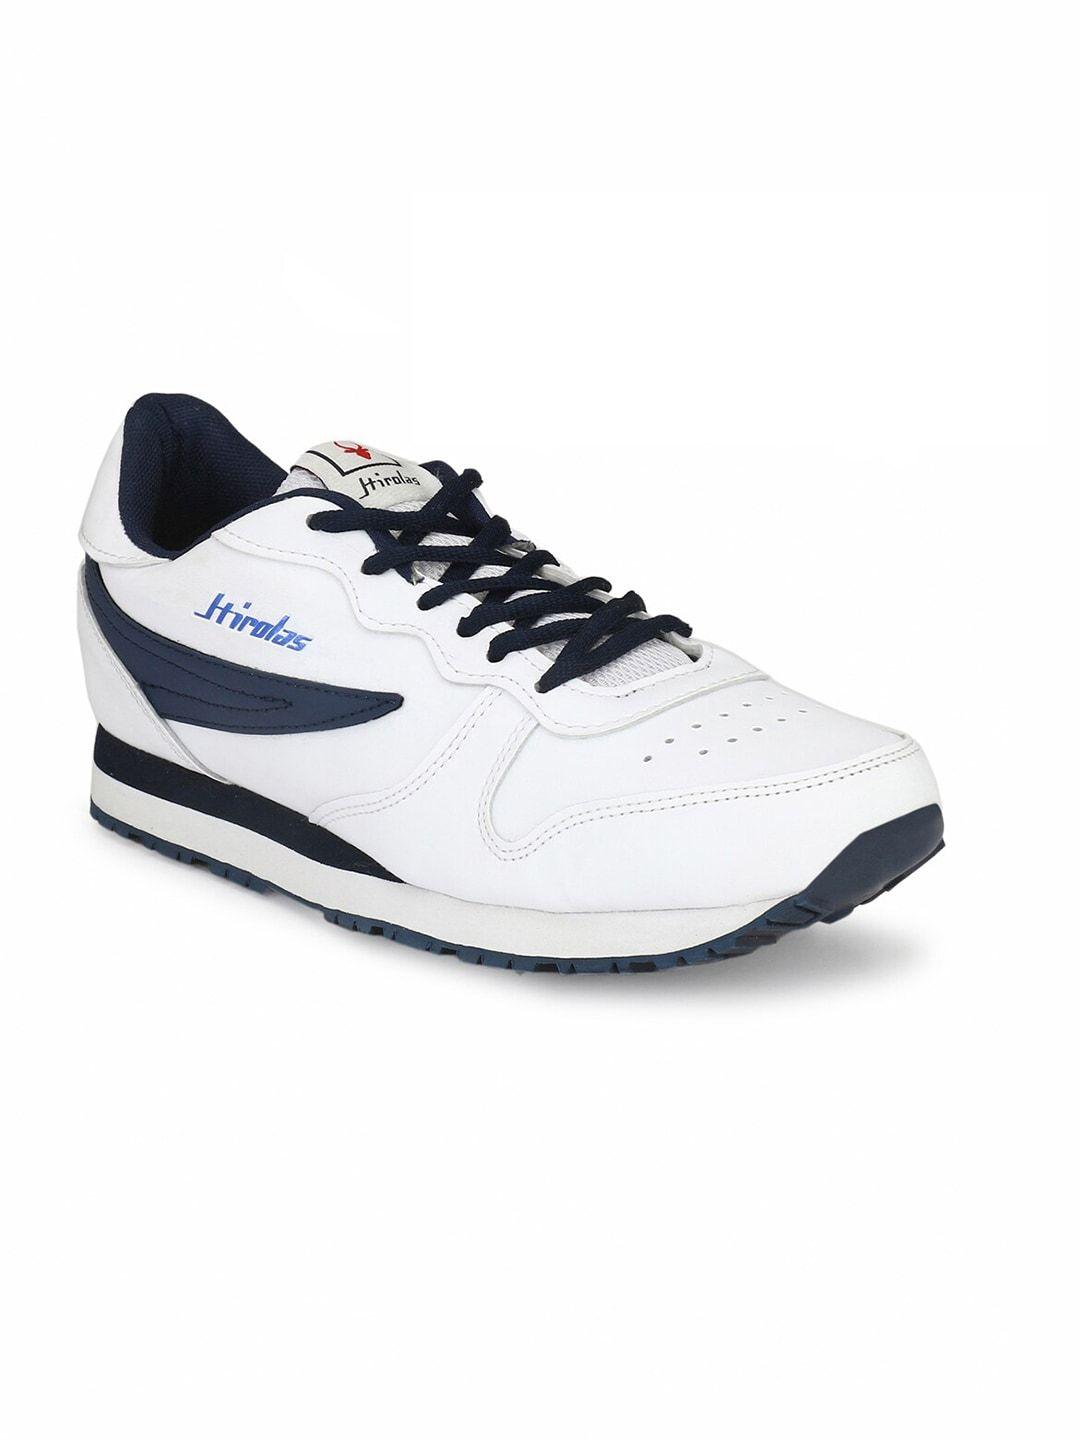 hirolas men white & navy blue running shoes